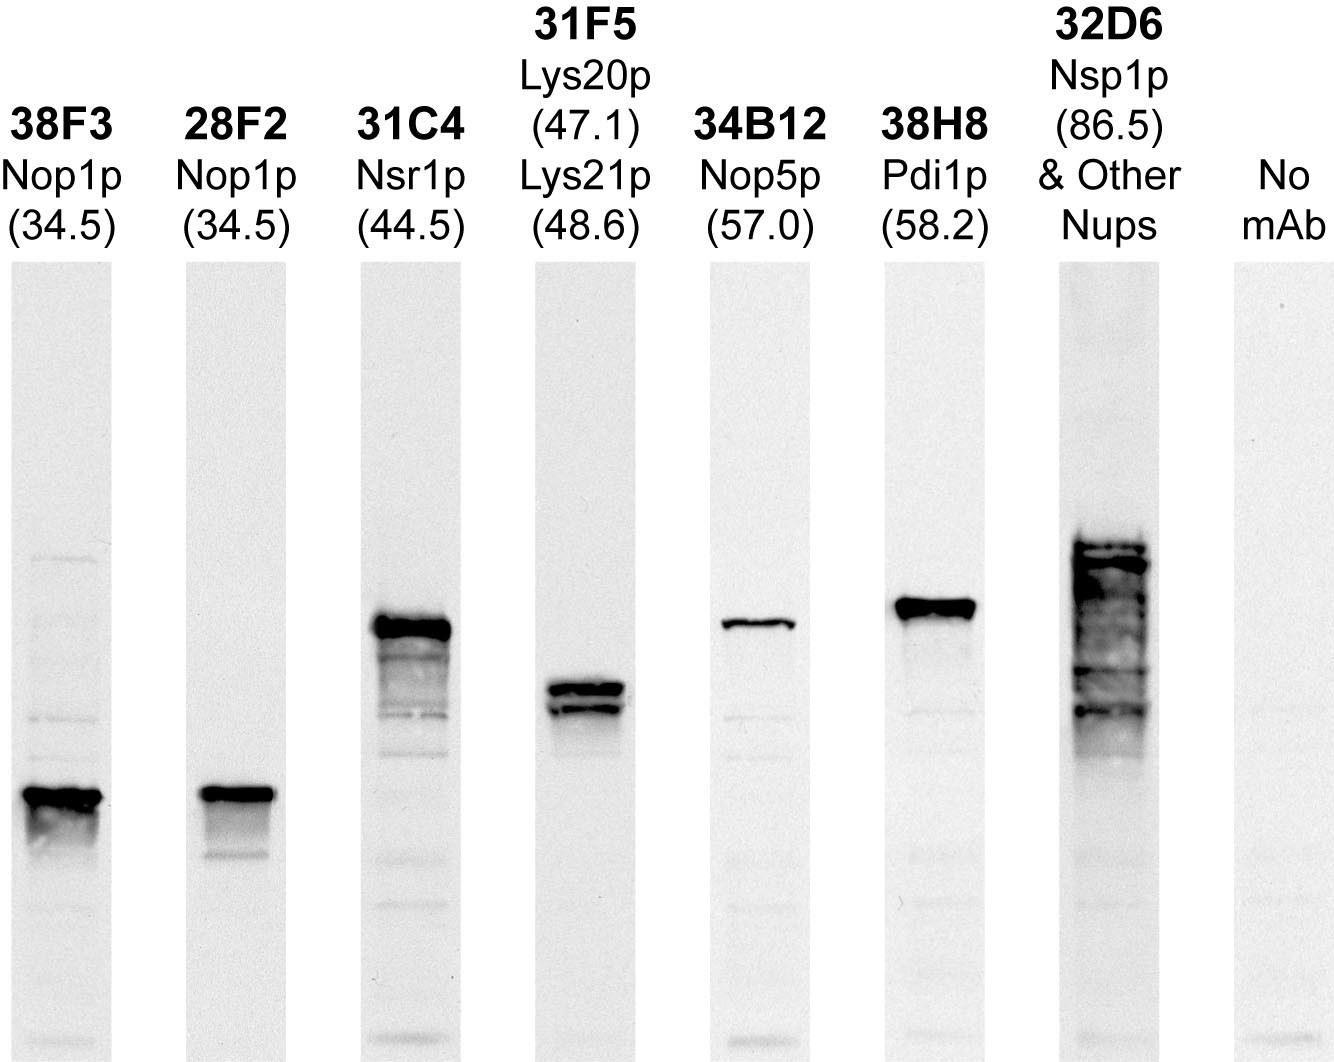 Anti-Nsp1p Antibody [32D6]